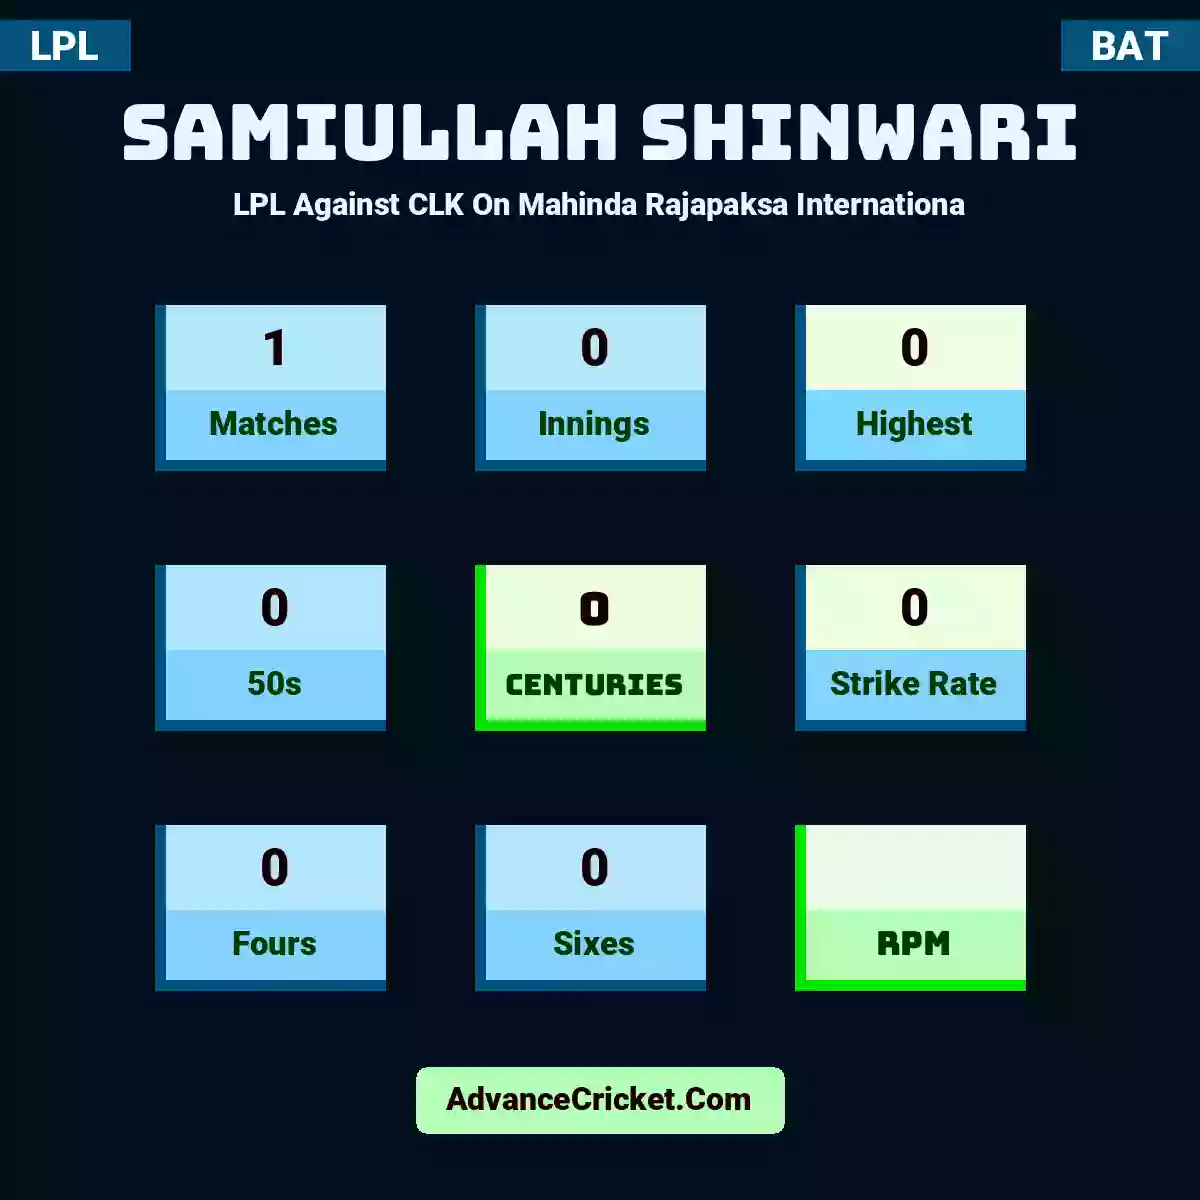 Samiullah Shinwari LPL  Against CLK On Mahinda Rajapaksa Internationa, Samiullah Shinwari played 1 matches, scored 0 runs as highest, 0 half-centuries, and 0 centuries, with a strike rate of 0. S.Shinwari hit 0 fours and 0 sixes.